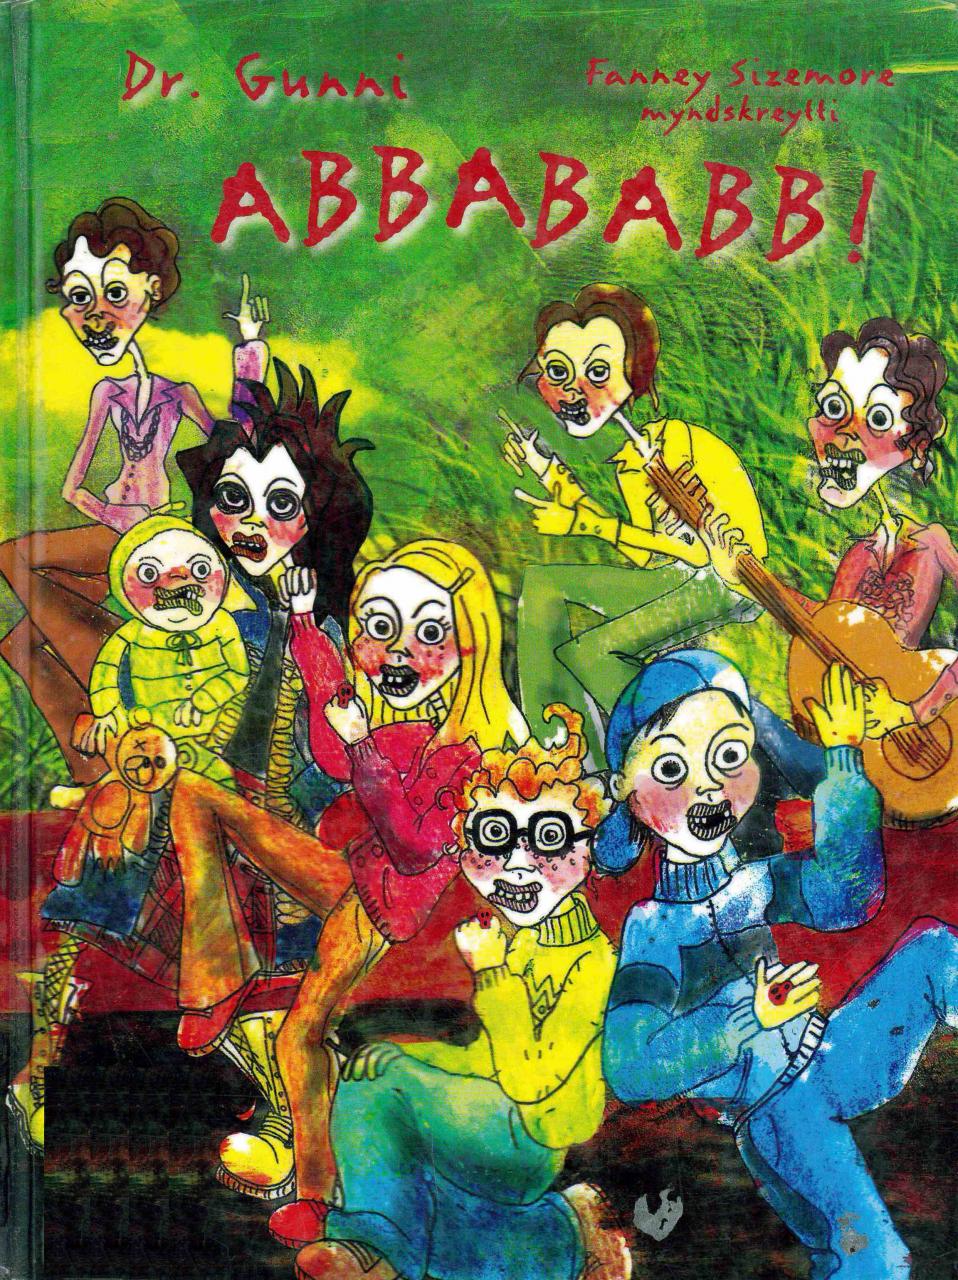 Abbababb!